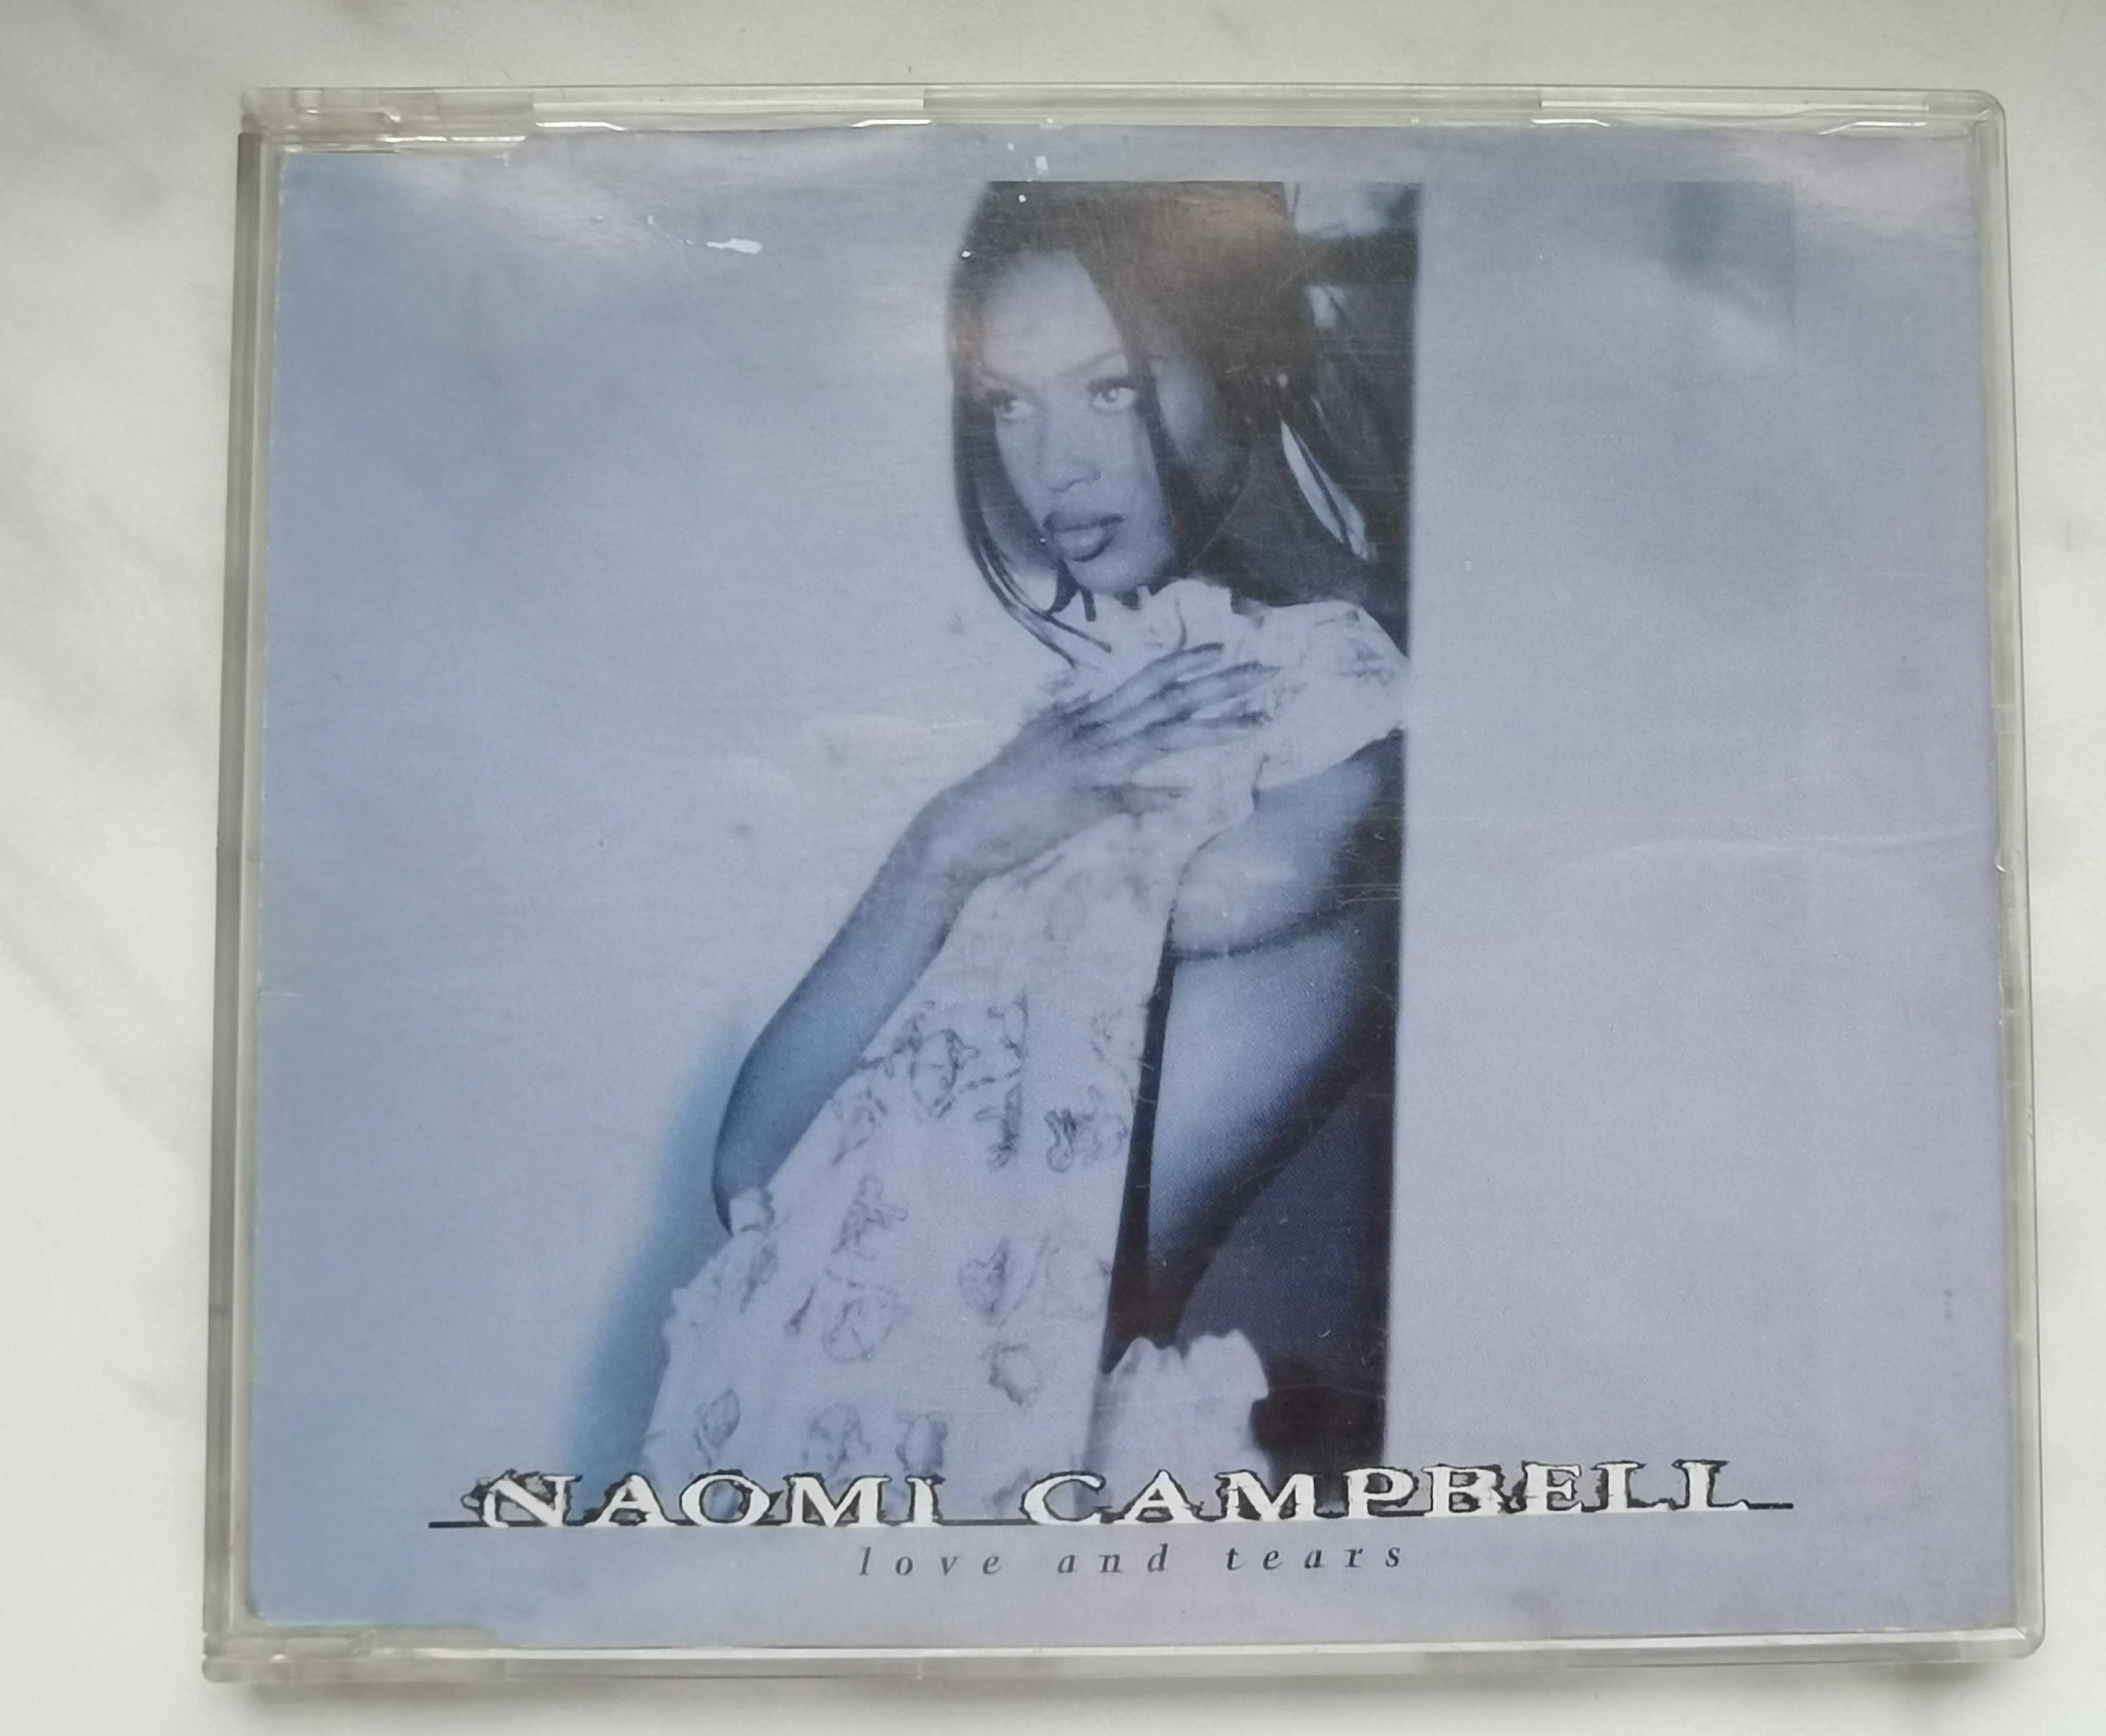 Naomi Campbell – Love And Tears [maxi CD]